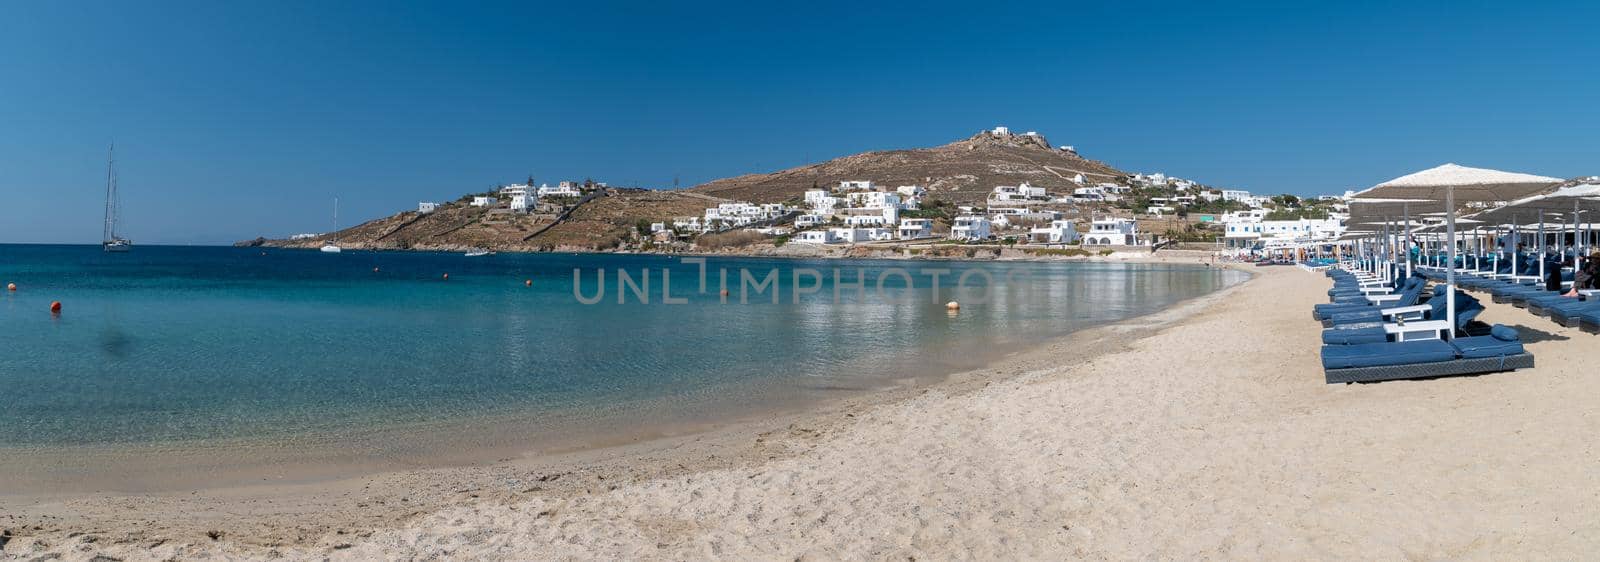 Ornos beach Mykonos island, famous Ornos beach organized with sun beds emerald clear water beach of Ornos in island of Mykonos, Cyclades, Greece by fokkebok